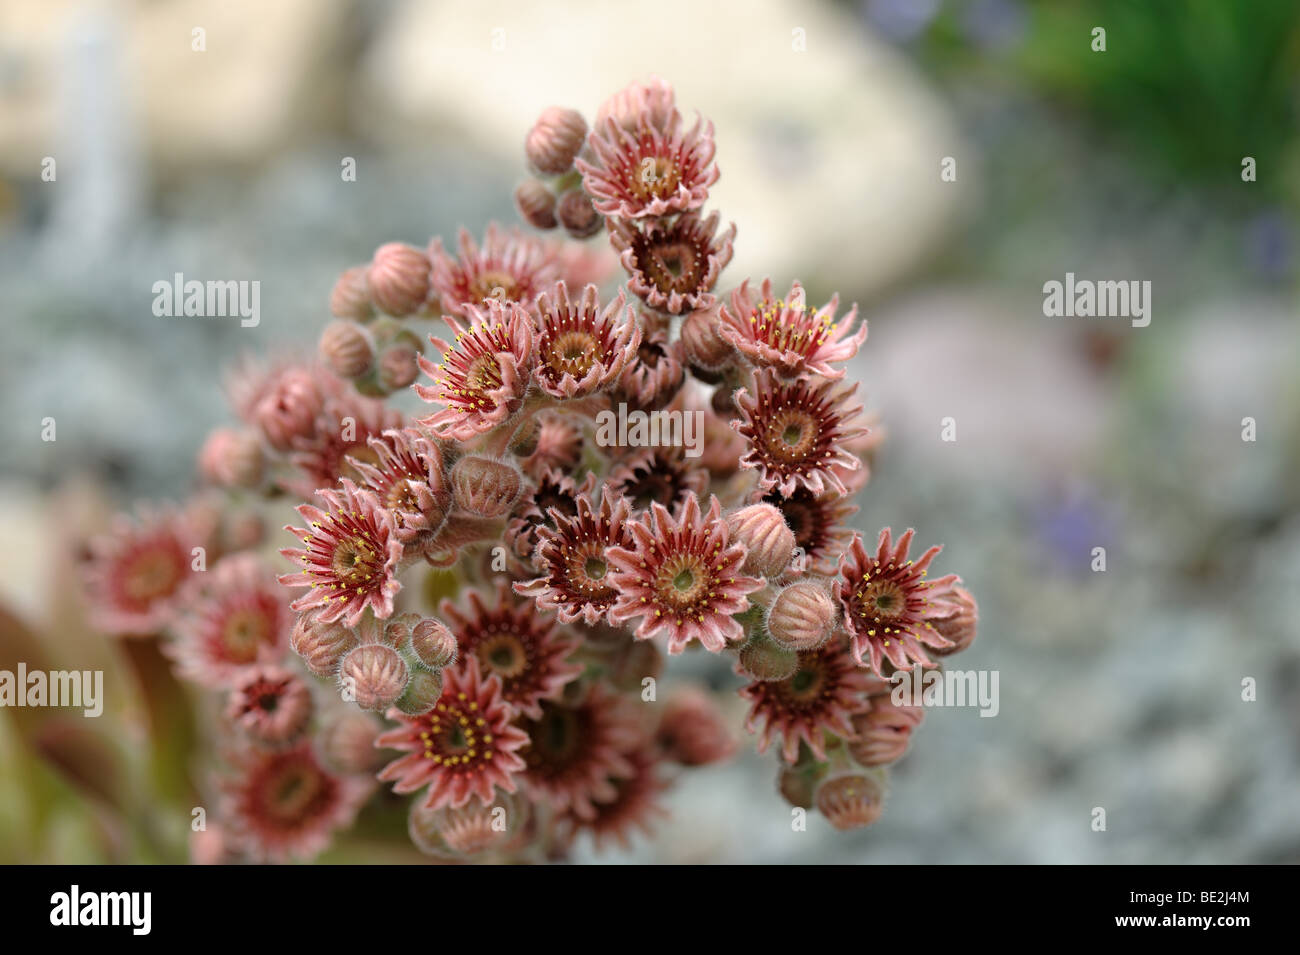 Common house leek (Sempervivum tectorum) flower on evergreen succulent plant Stock Photo